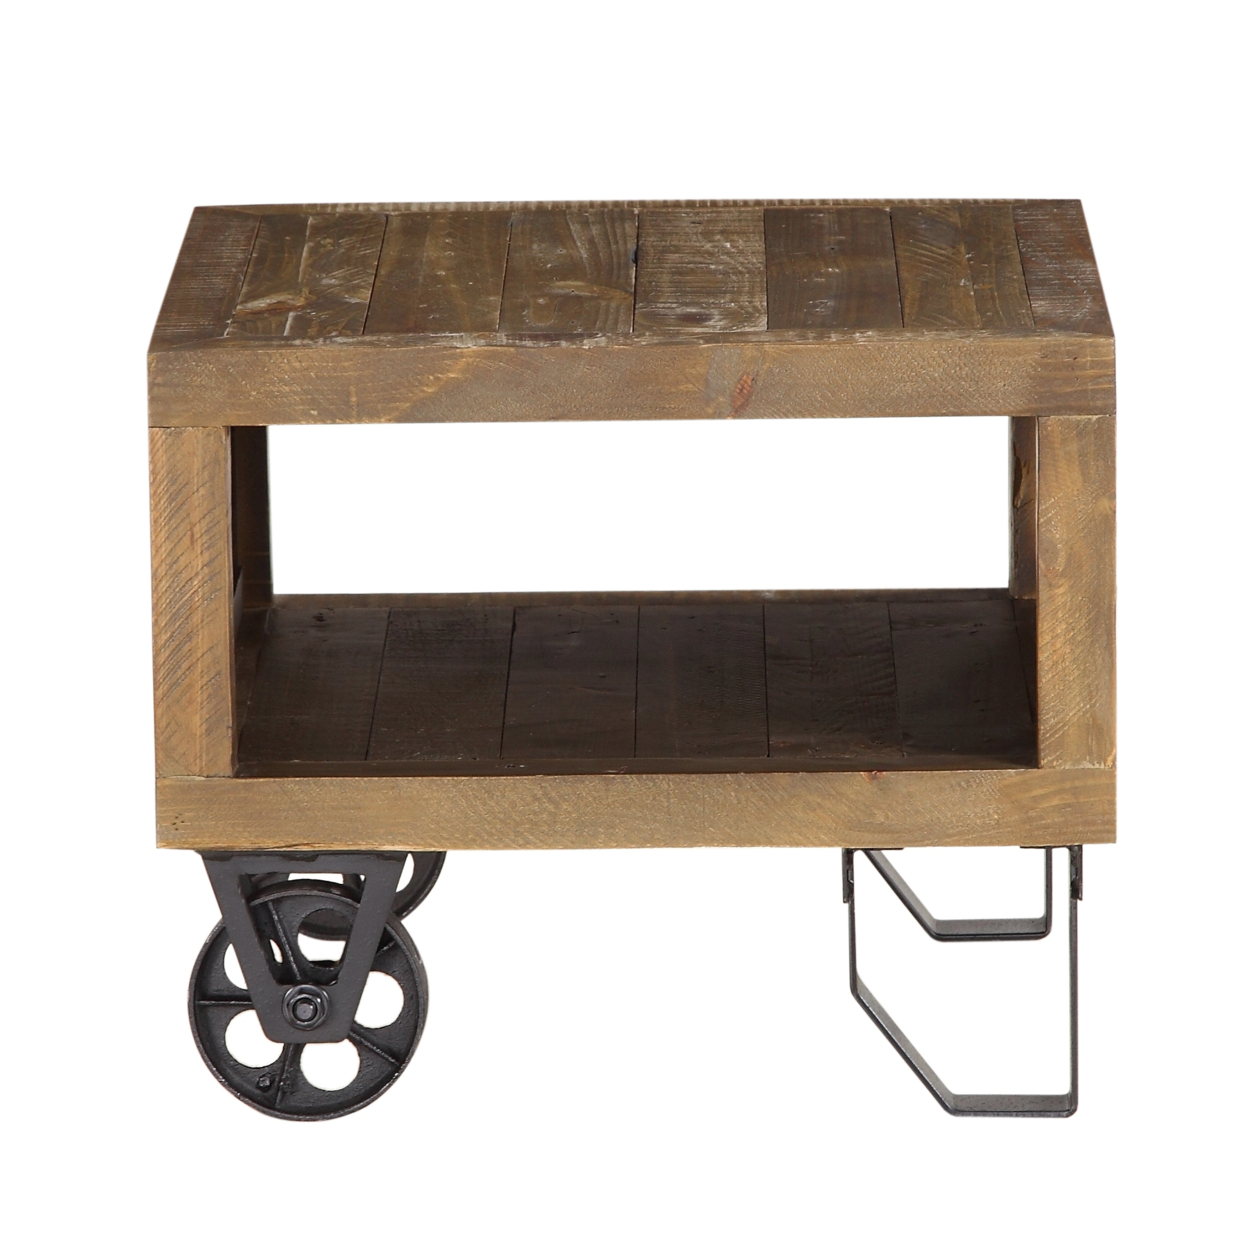 Pine Wood And Metal End Table With Wheelbarrow Base Design, Brown And Black- Saltoro Sherpi